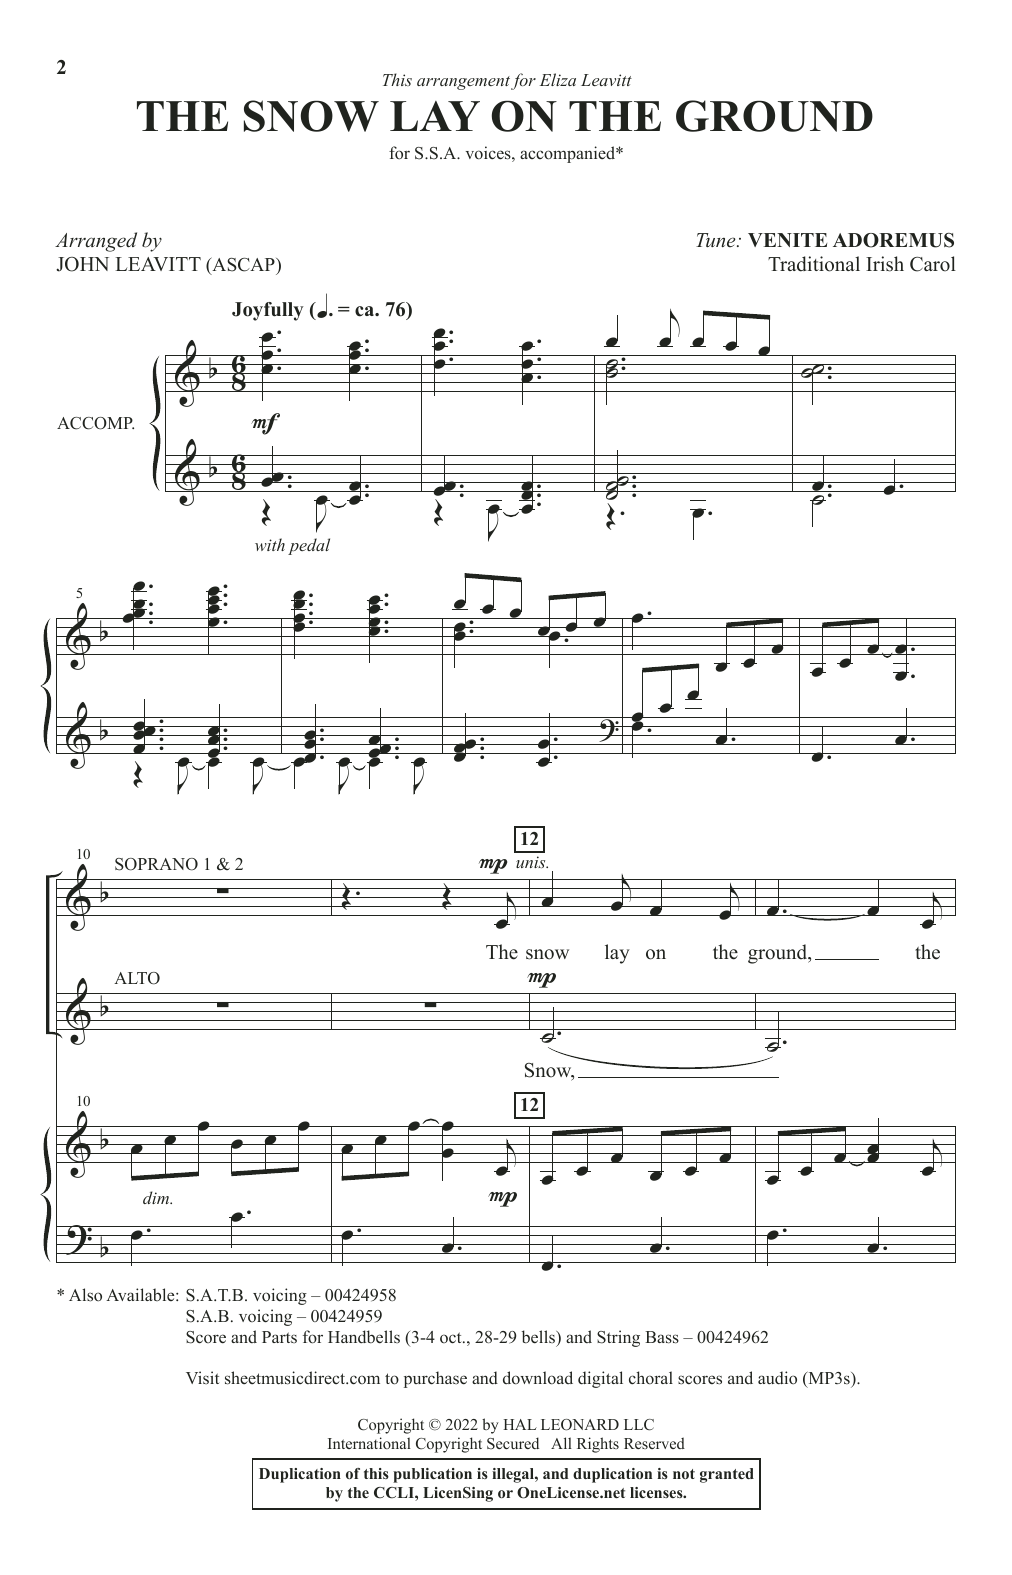 Traditional Irish Carol The Snow Lay On The Ground (arr. John Leavitt) Sheet Music Notes & Chords for SAB Choir - Download or Print PDF